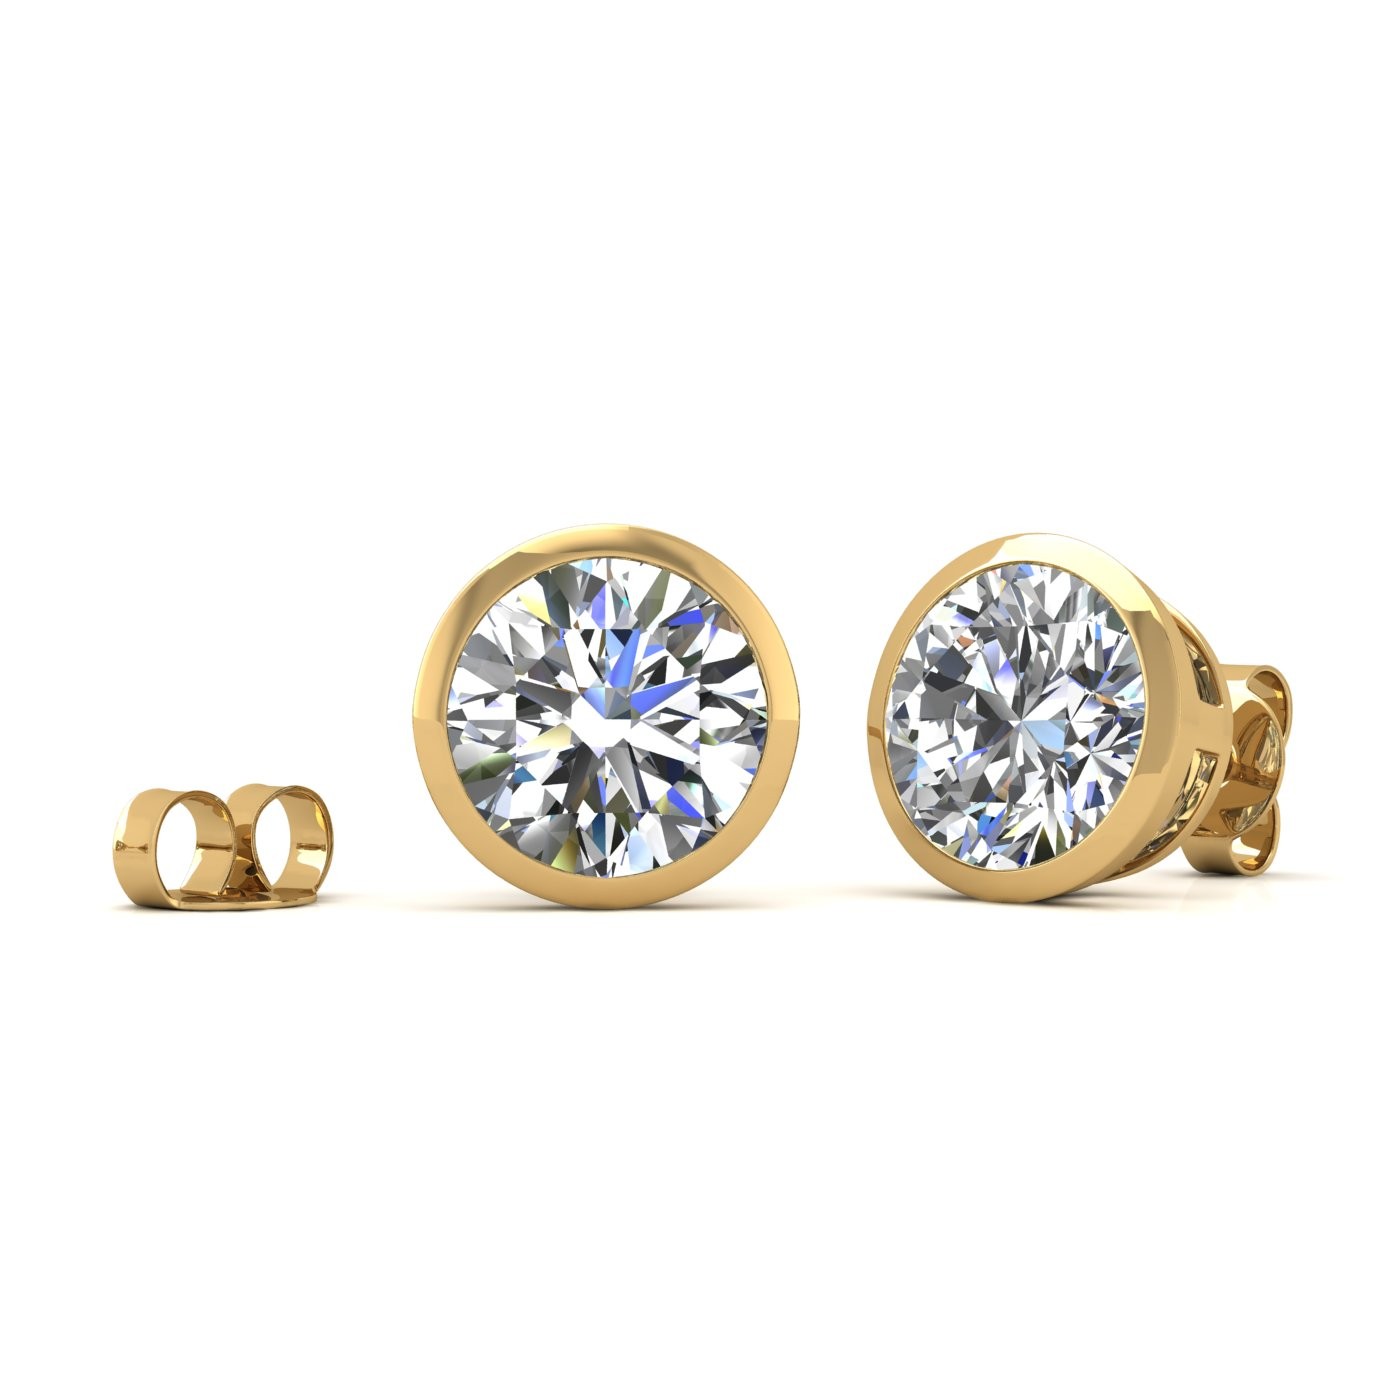 18k yellow gold 0,7 ct each (1,4 tcw) round brilliant cut diamond bezel set earring studs Photos & images